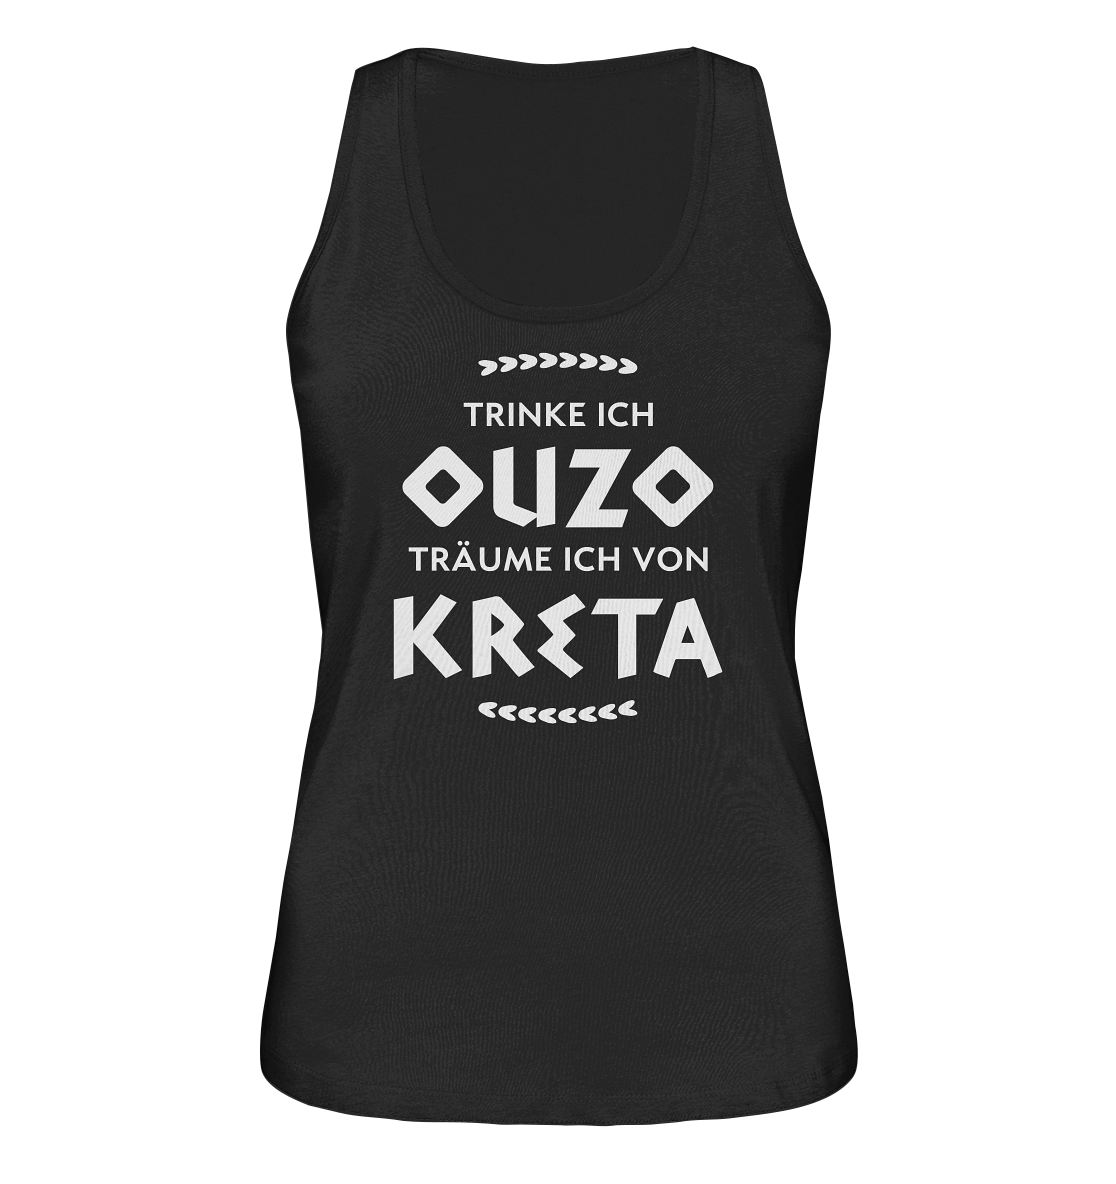 When I drink Ouzo I dream of Crete - Ladies Organic Tank Top